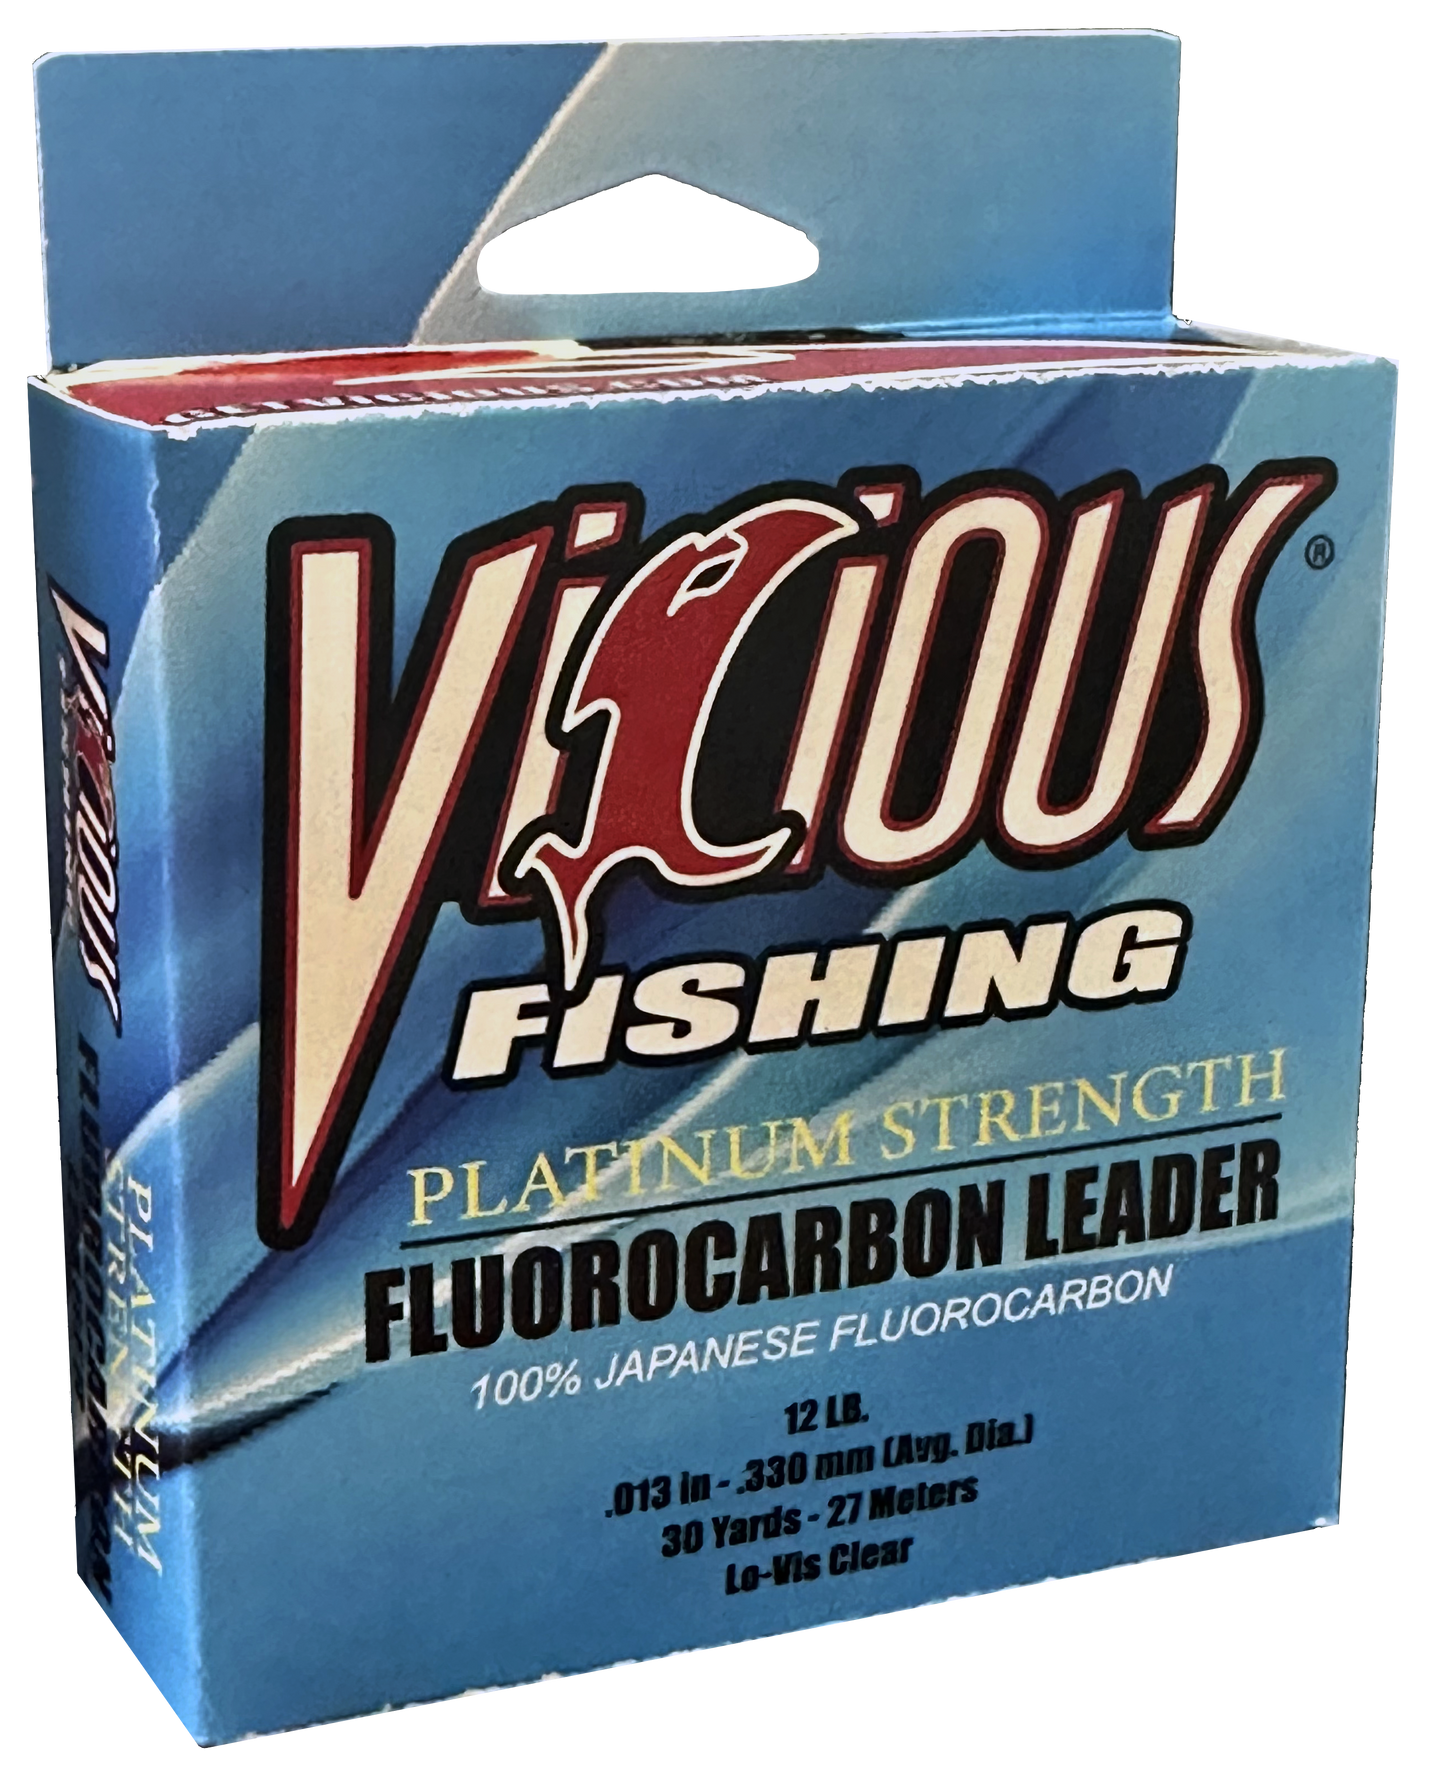 Vicious Platinum Strength 100% Fluorocarbon Leader - 30 Yards